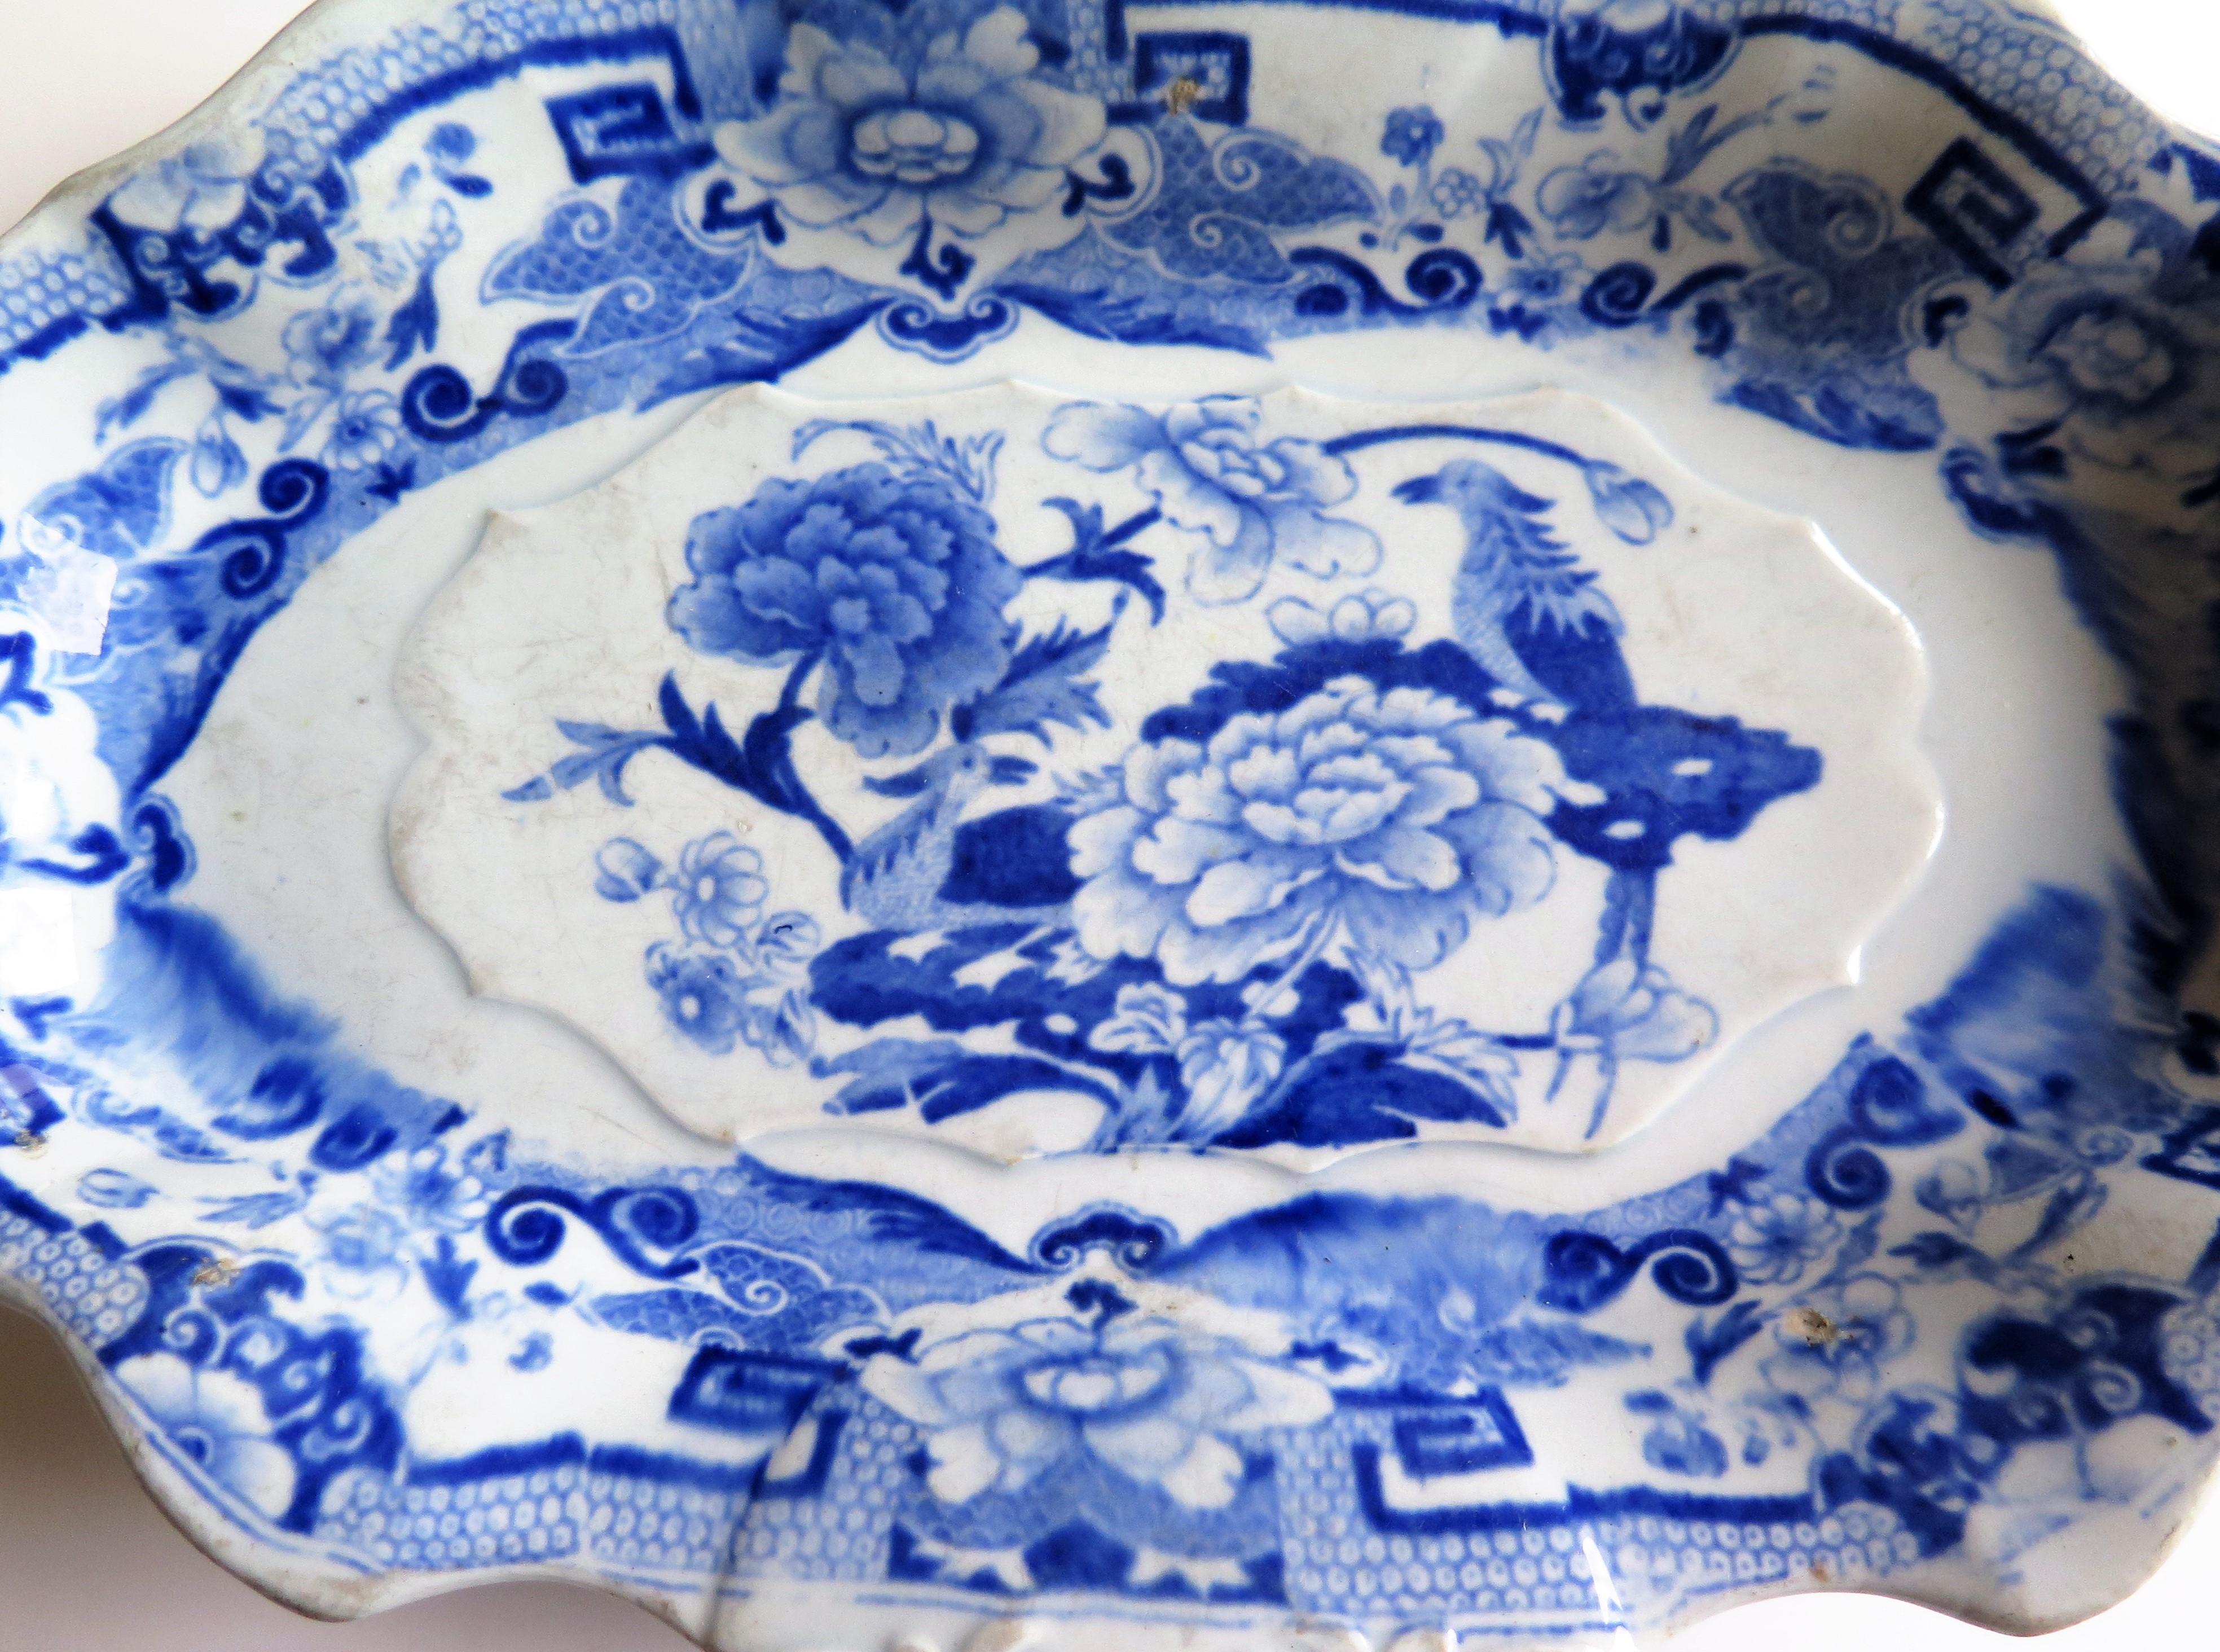 19th Century Mason's Ironstone Serving Dish Blue and White India Pheasants Pattern, circa 1820